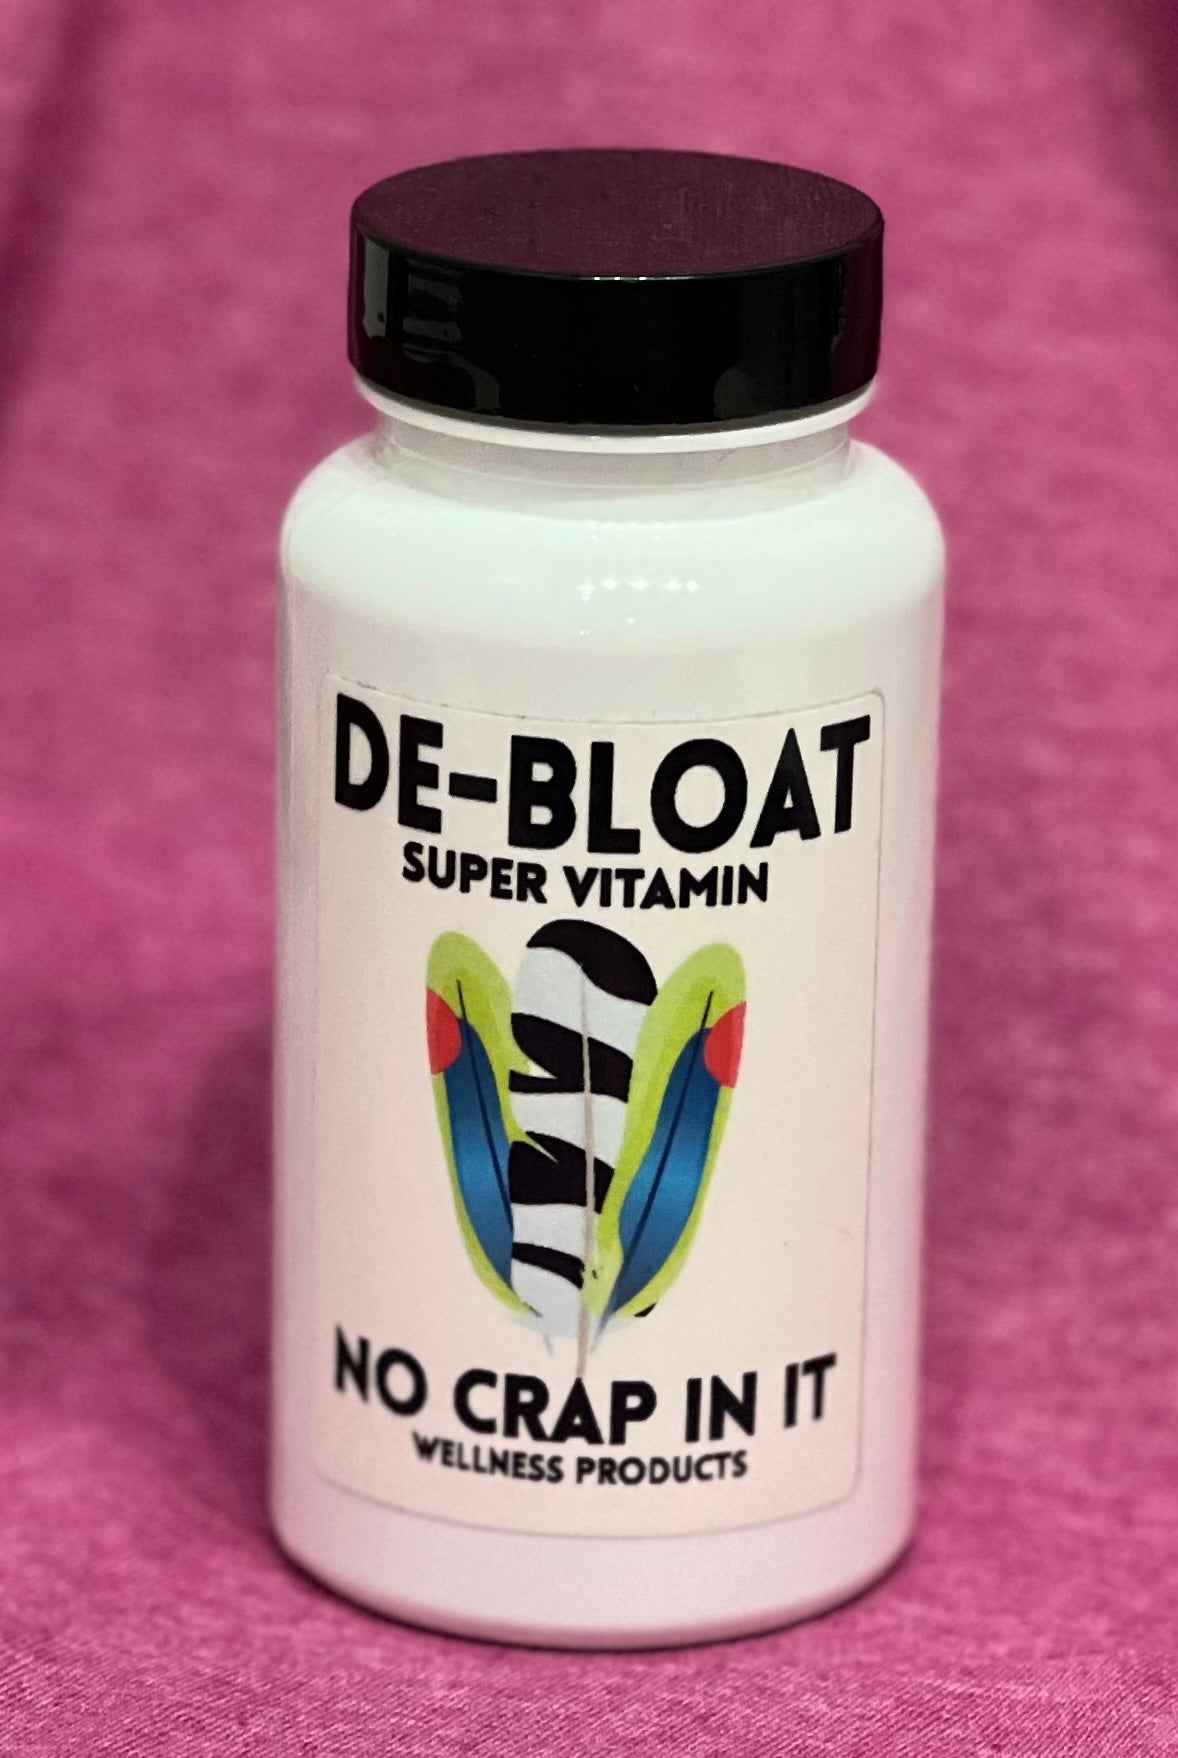 No Crap In It Super Vitamin